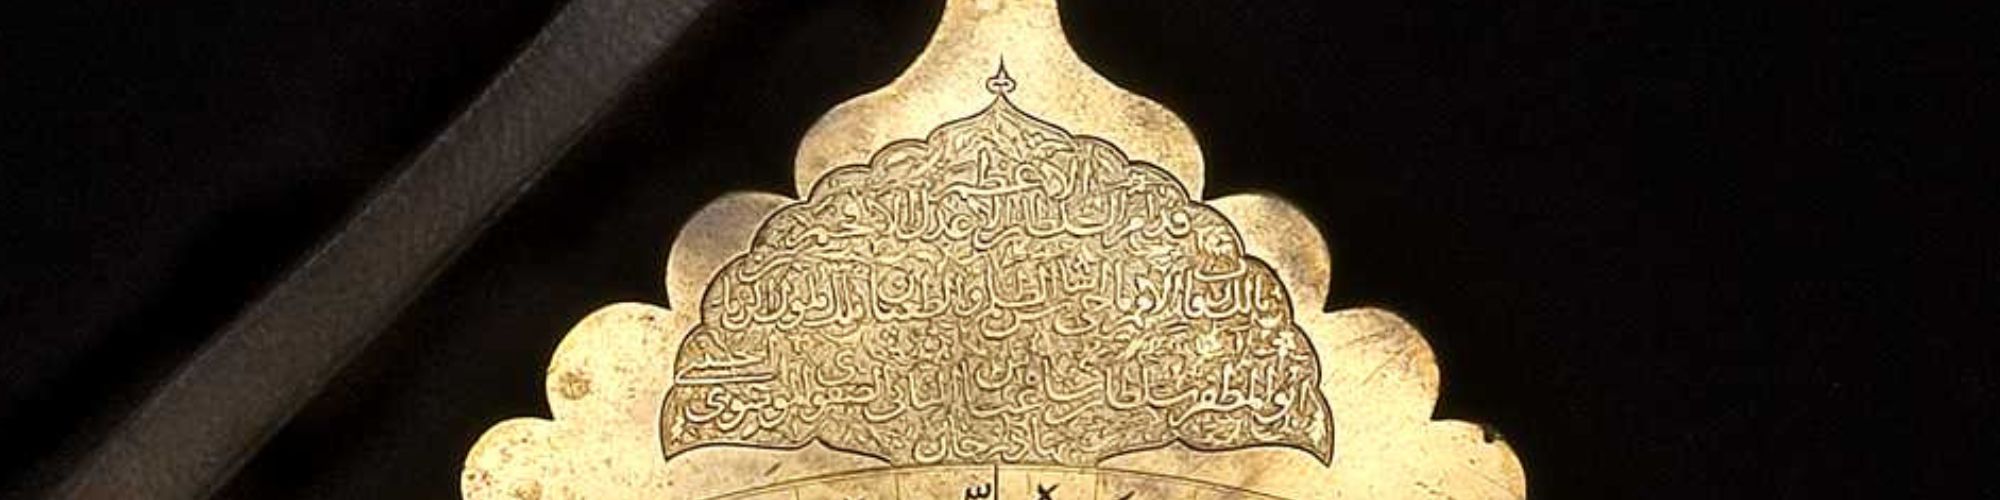 Astrolabe, by Muhammad Muqim al-Yazdi, Persian, 1647/8 (Inscription on the throne)